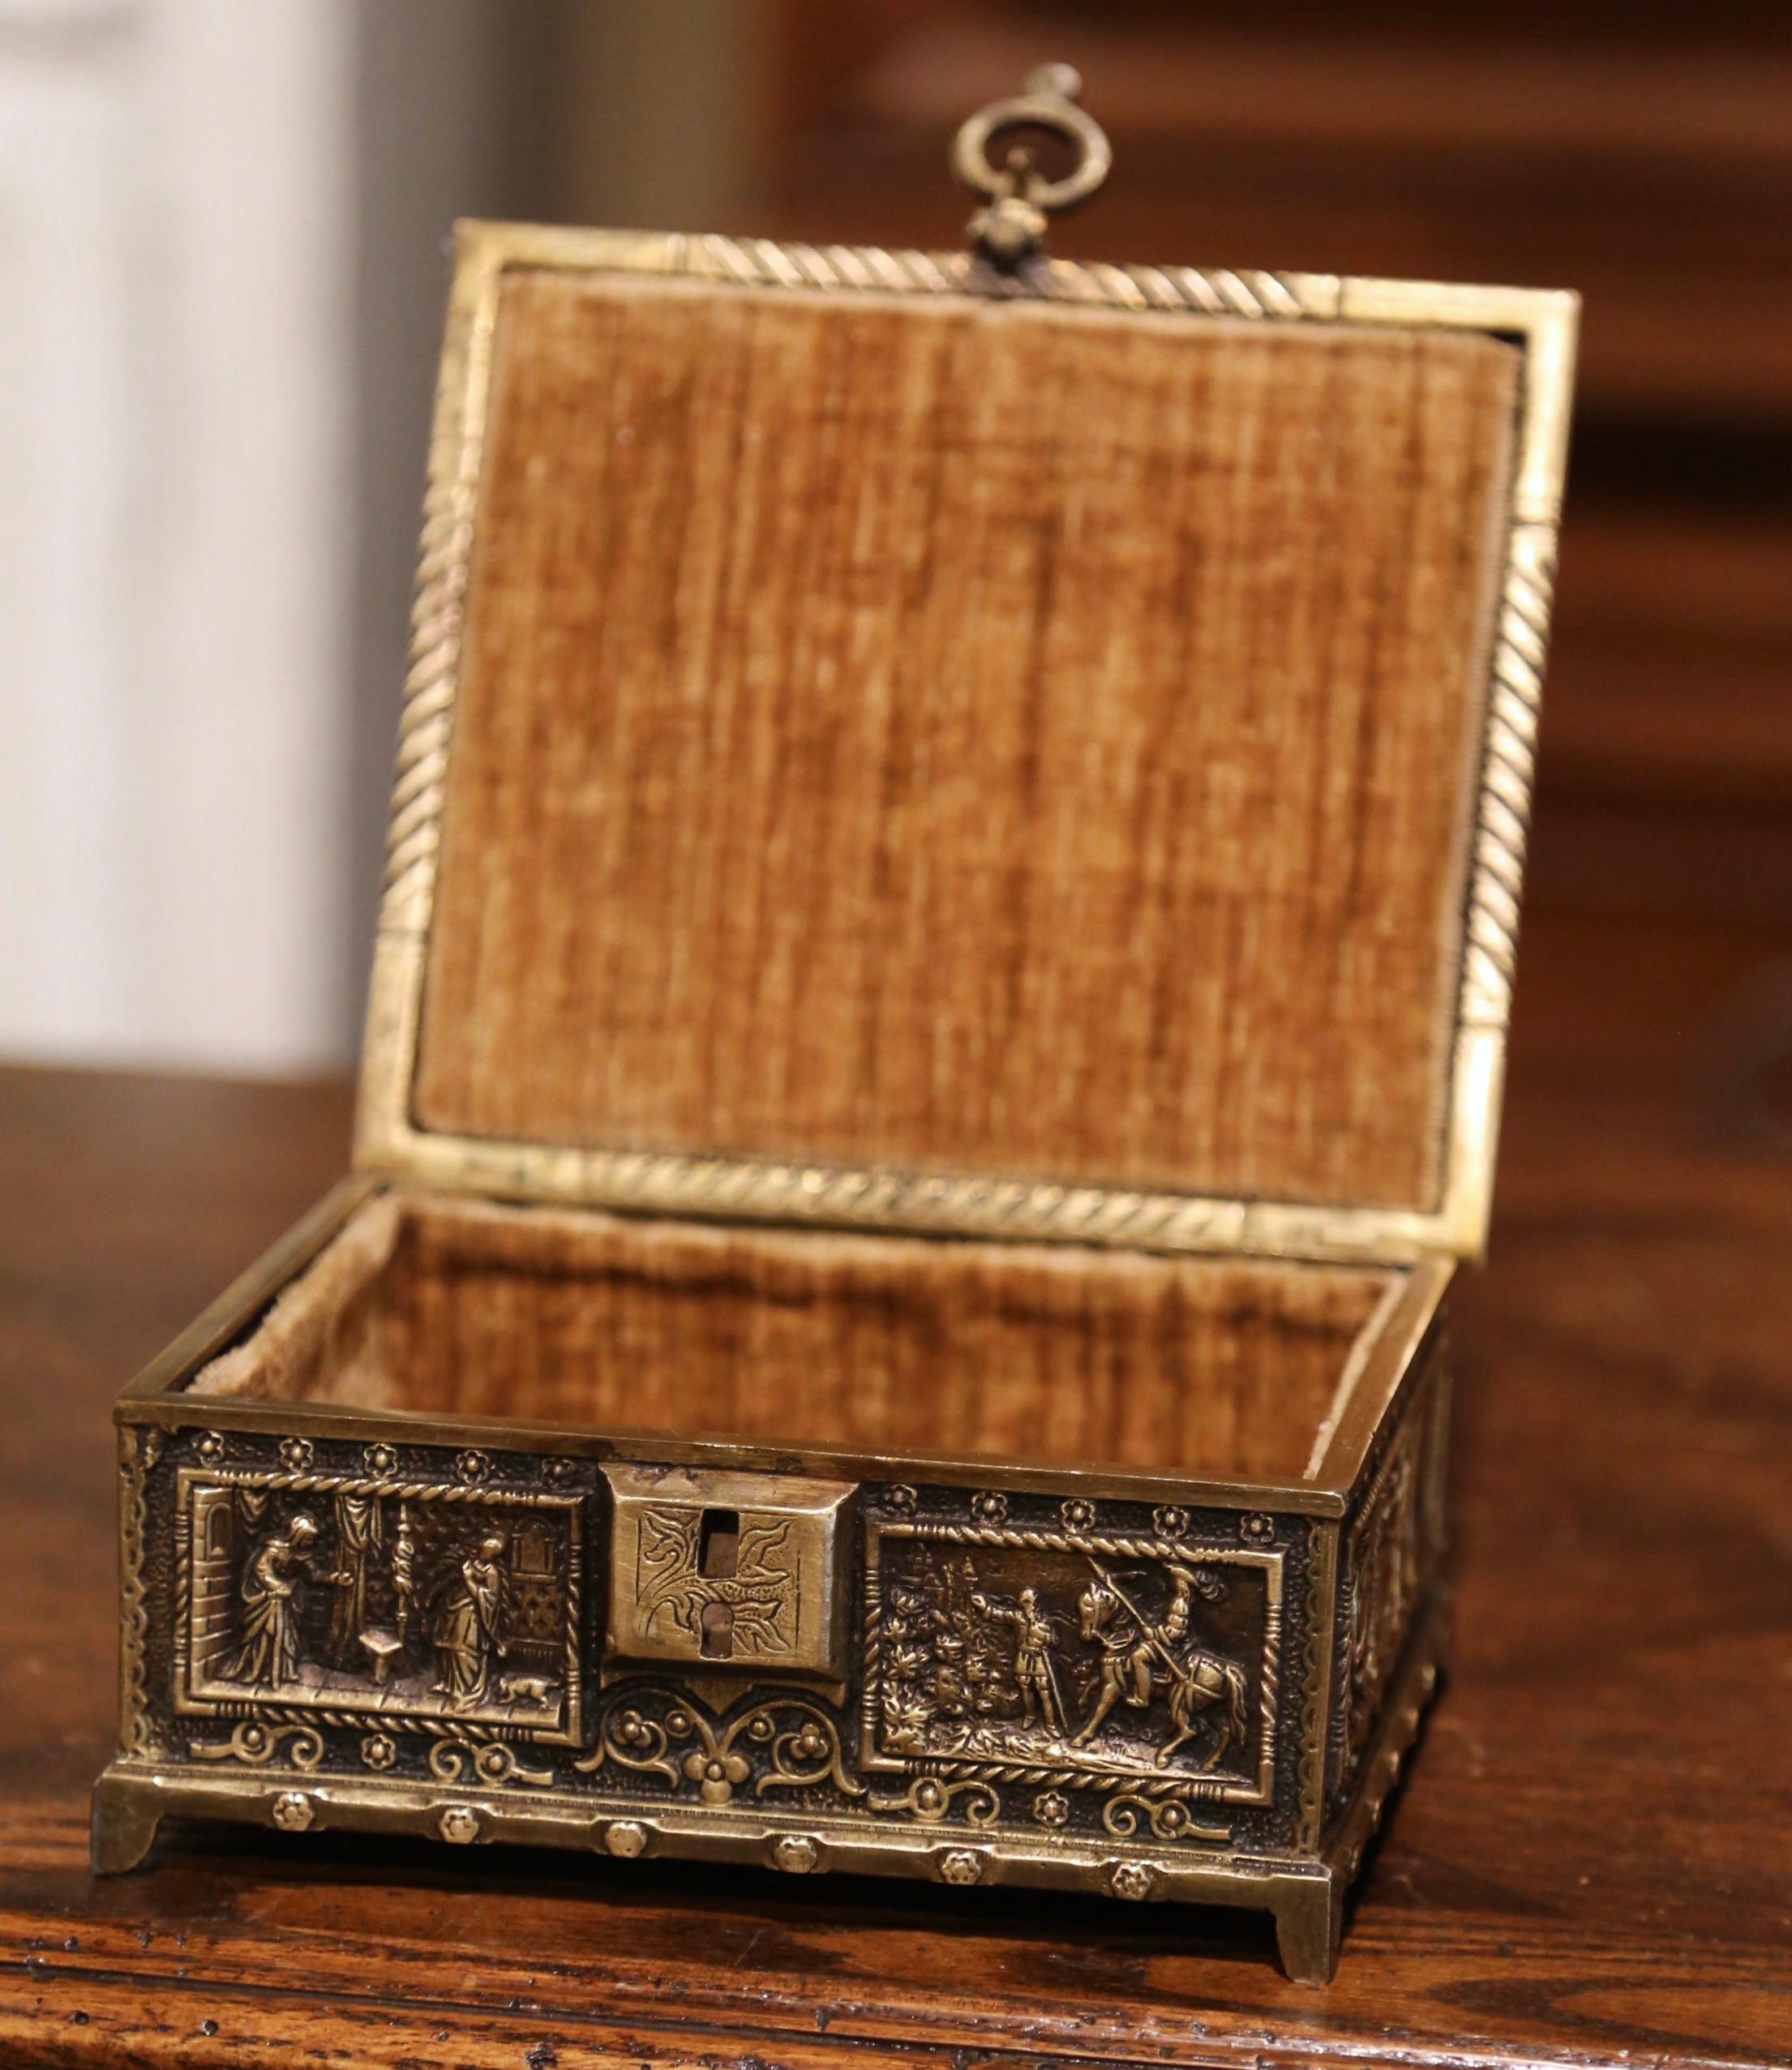 Renaissance 19th Century French Patinated Bronze Jewelry Box with Mythology Decor